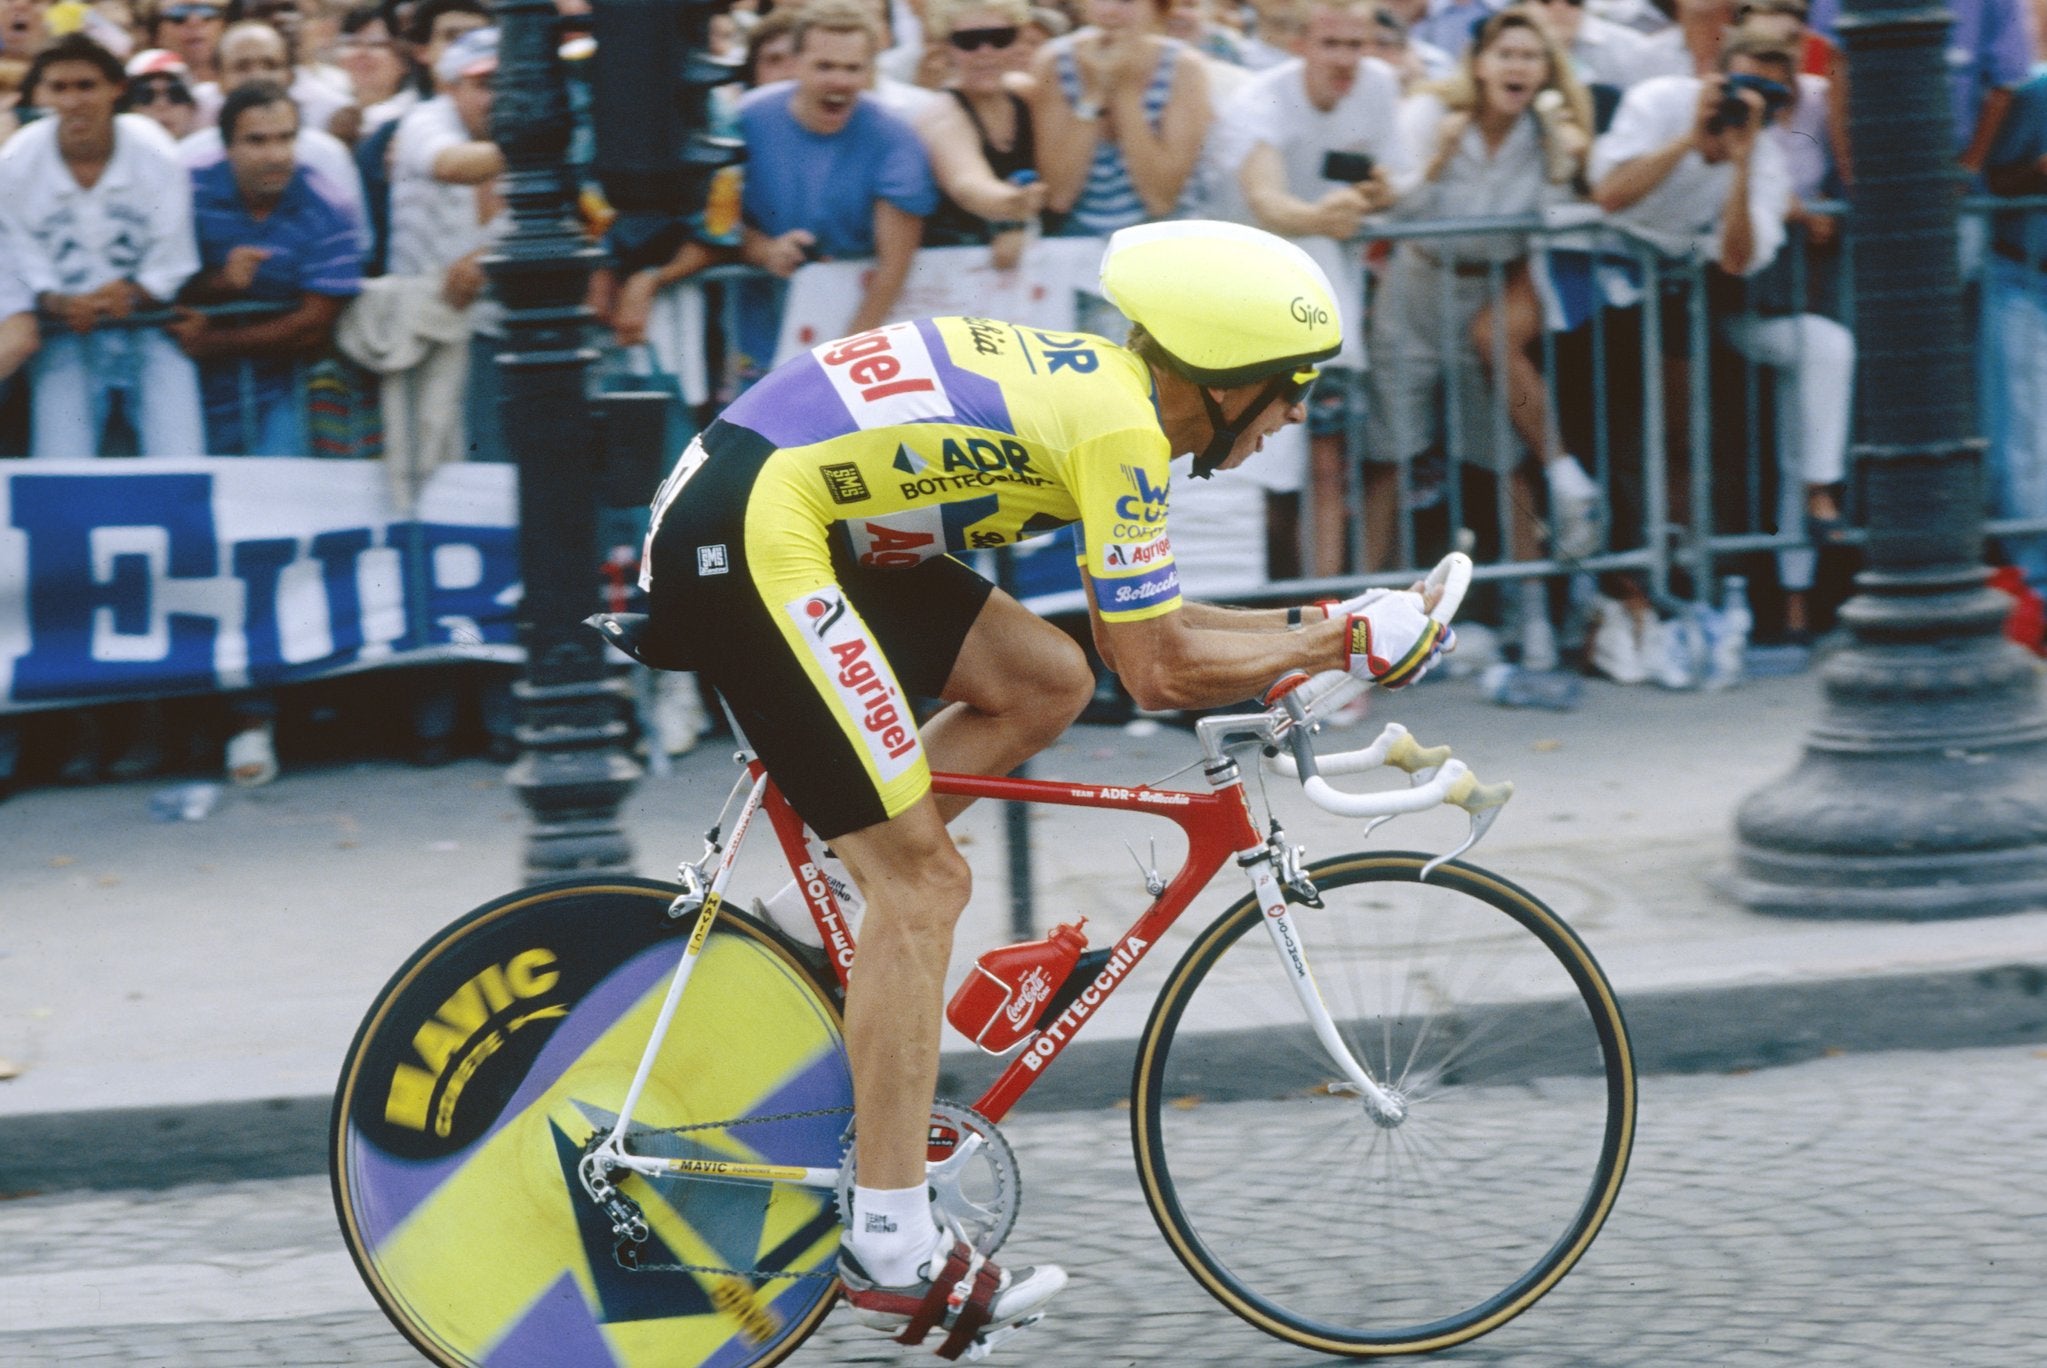 Greg Lemond 1989 Tour de France TT win aero bike